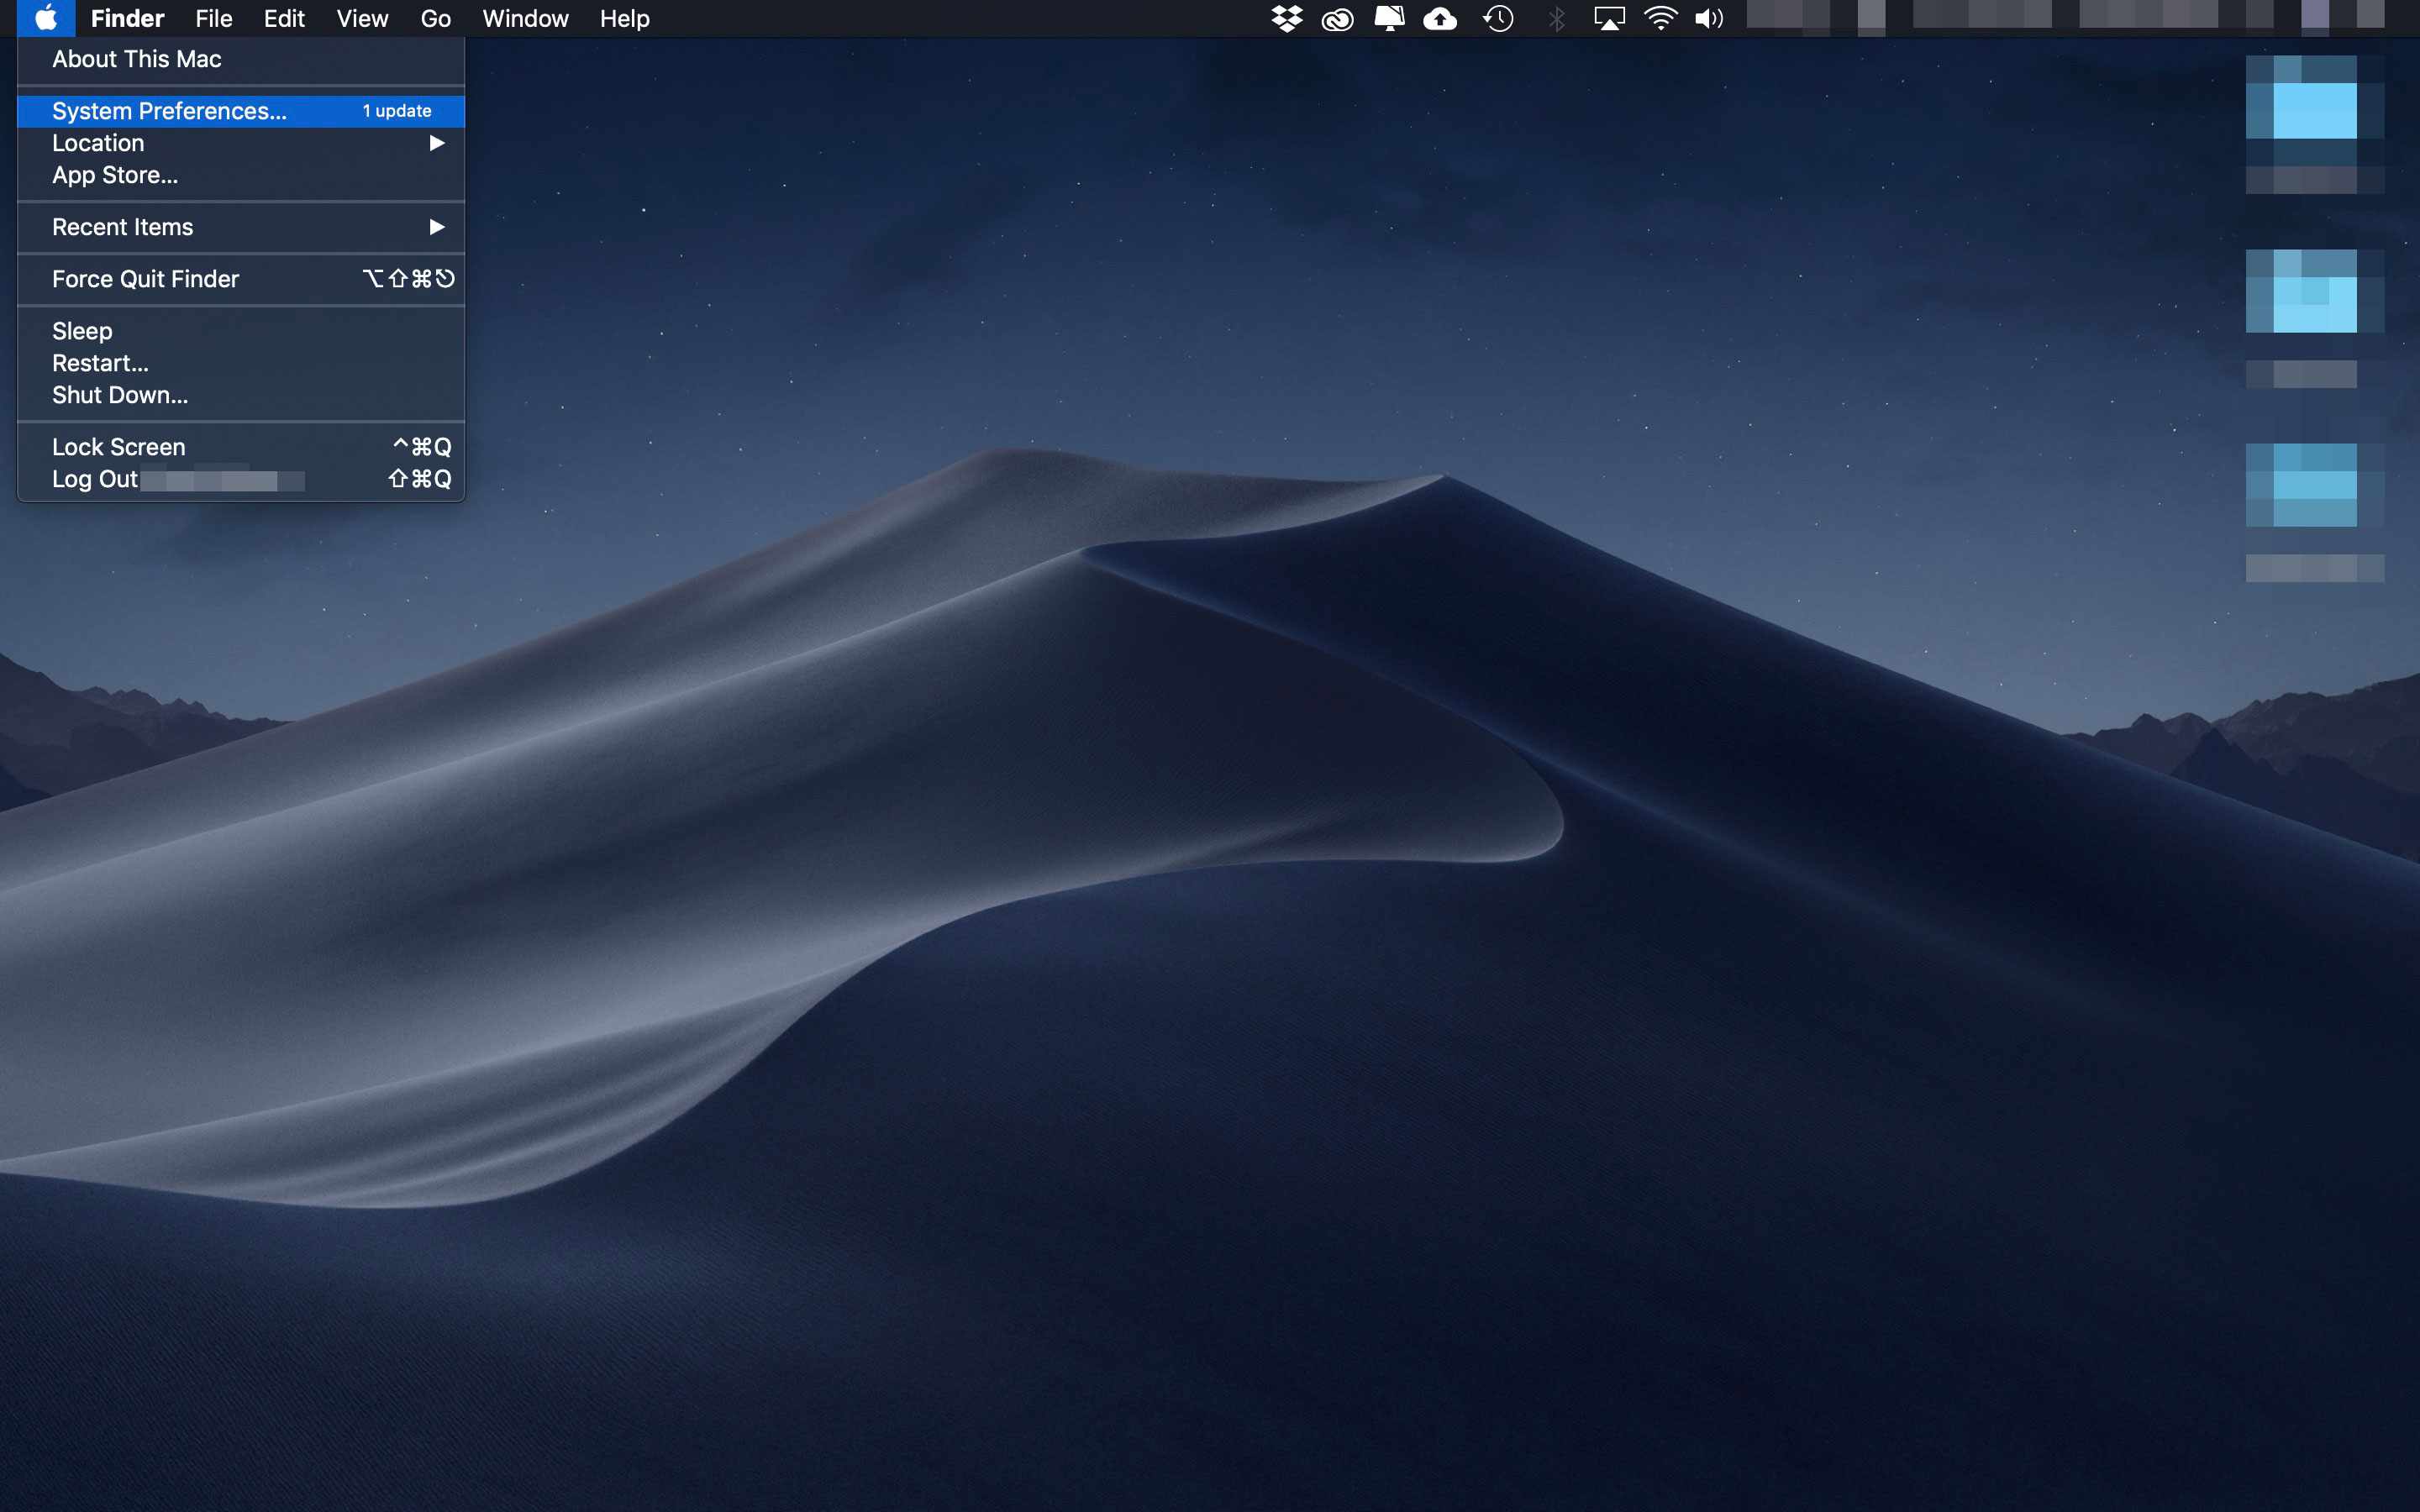 Boot Camp Mac Os X Lion 10.7.5